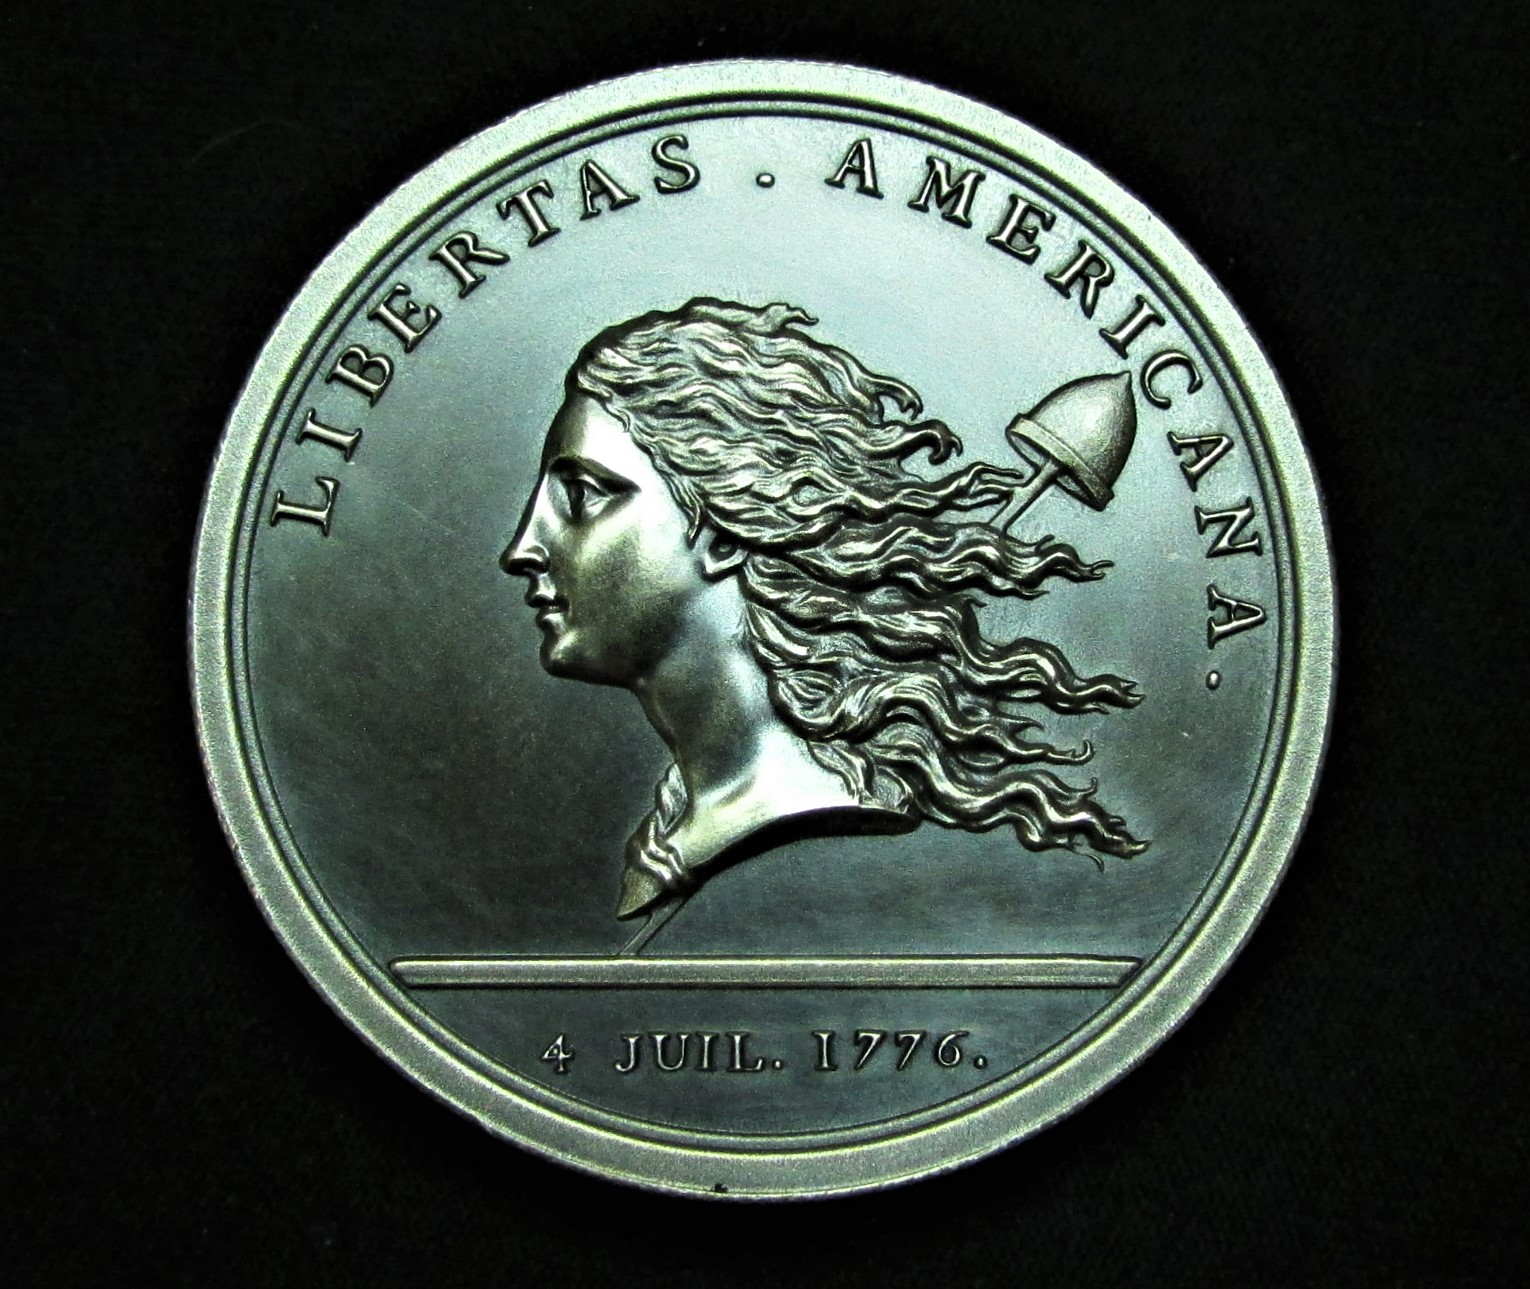 Intaglio Mint 2021 - Libertas Americana Tribute - obverse - 2oz.JPG